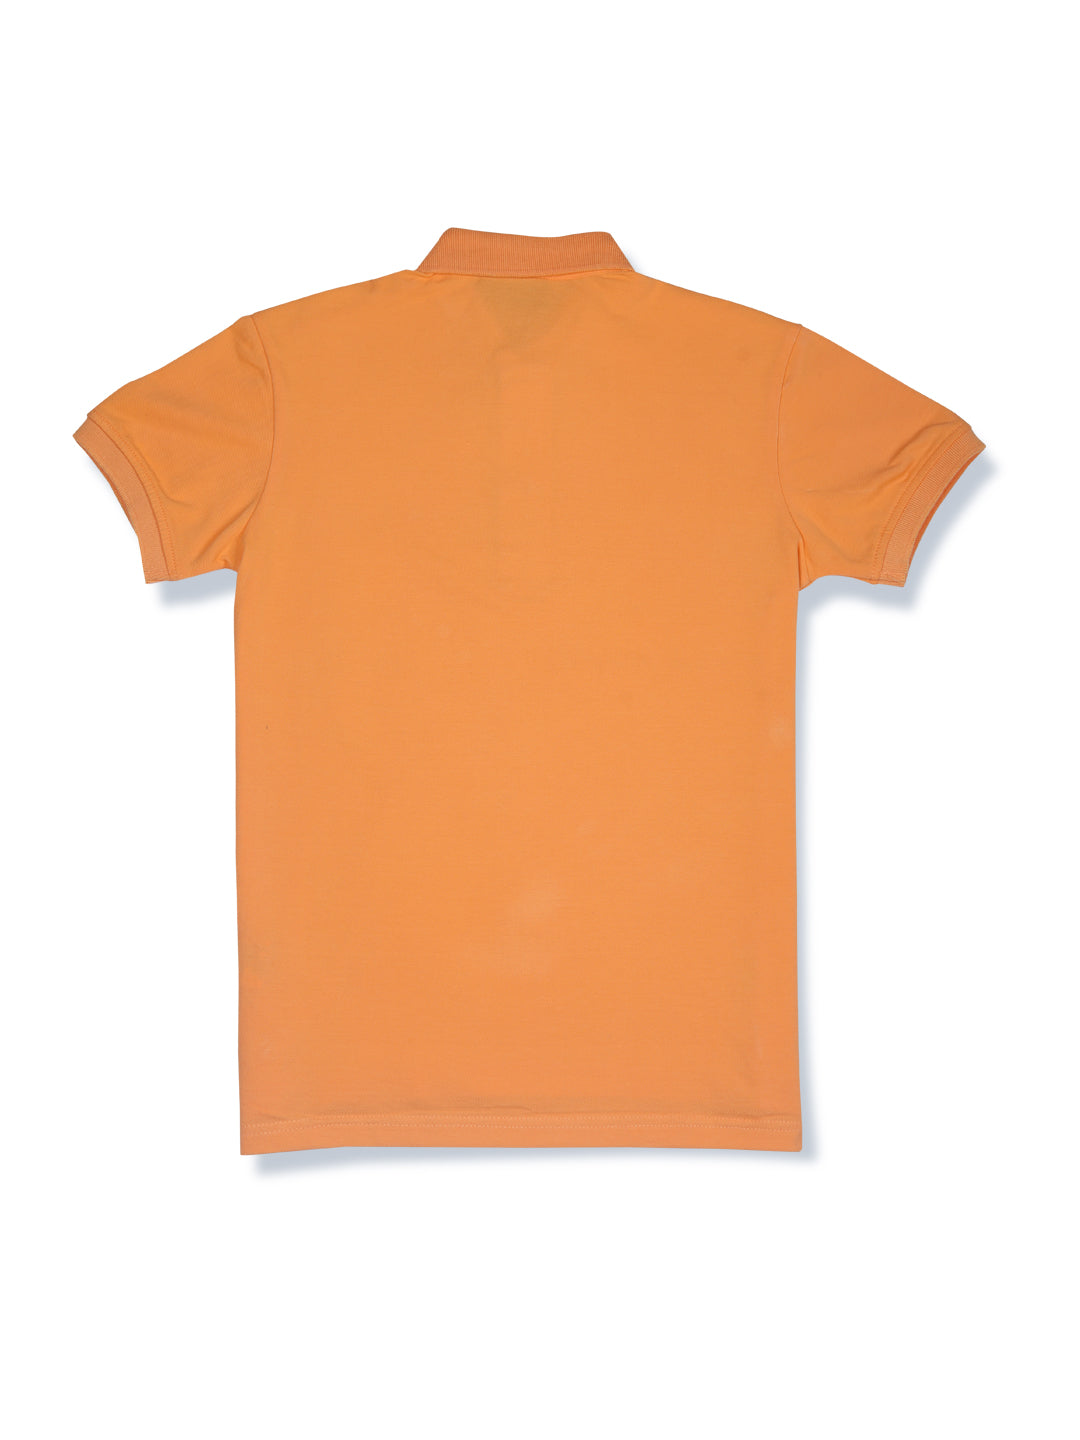 Boys Orange Solid Cotton Polo T-Shirt